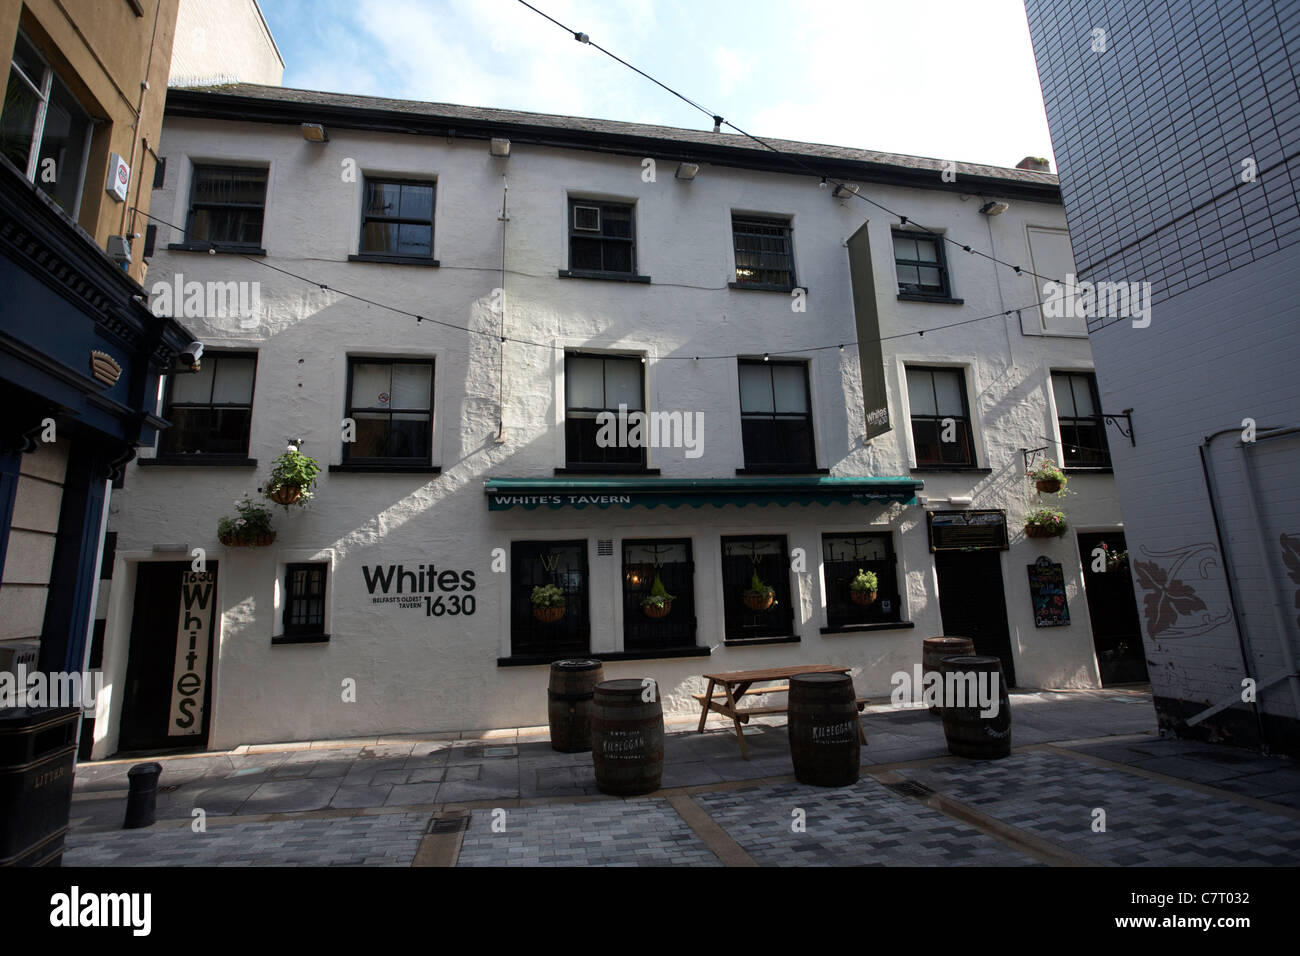 Whites Tavern, Belfasts oldest tavern established in 1630, Winecellar Entry, Belfast city centre, Northern Ireland, UK. Stock Photo